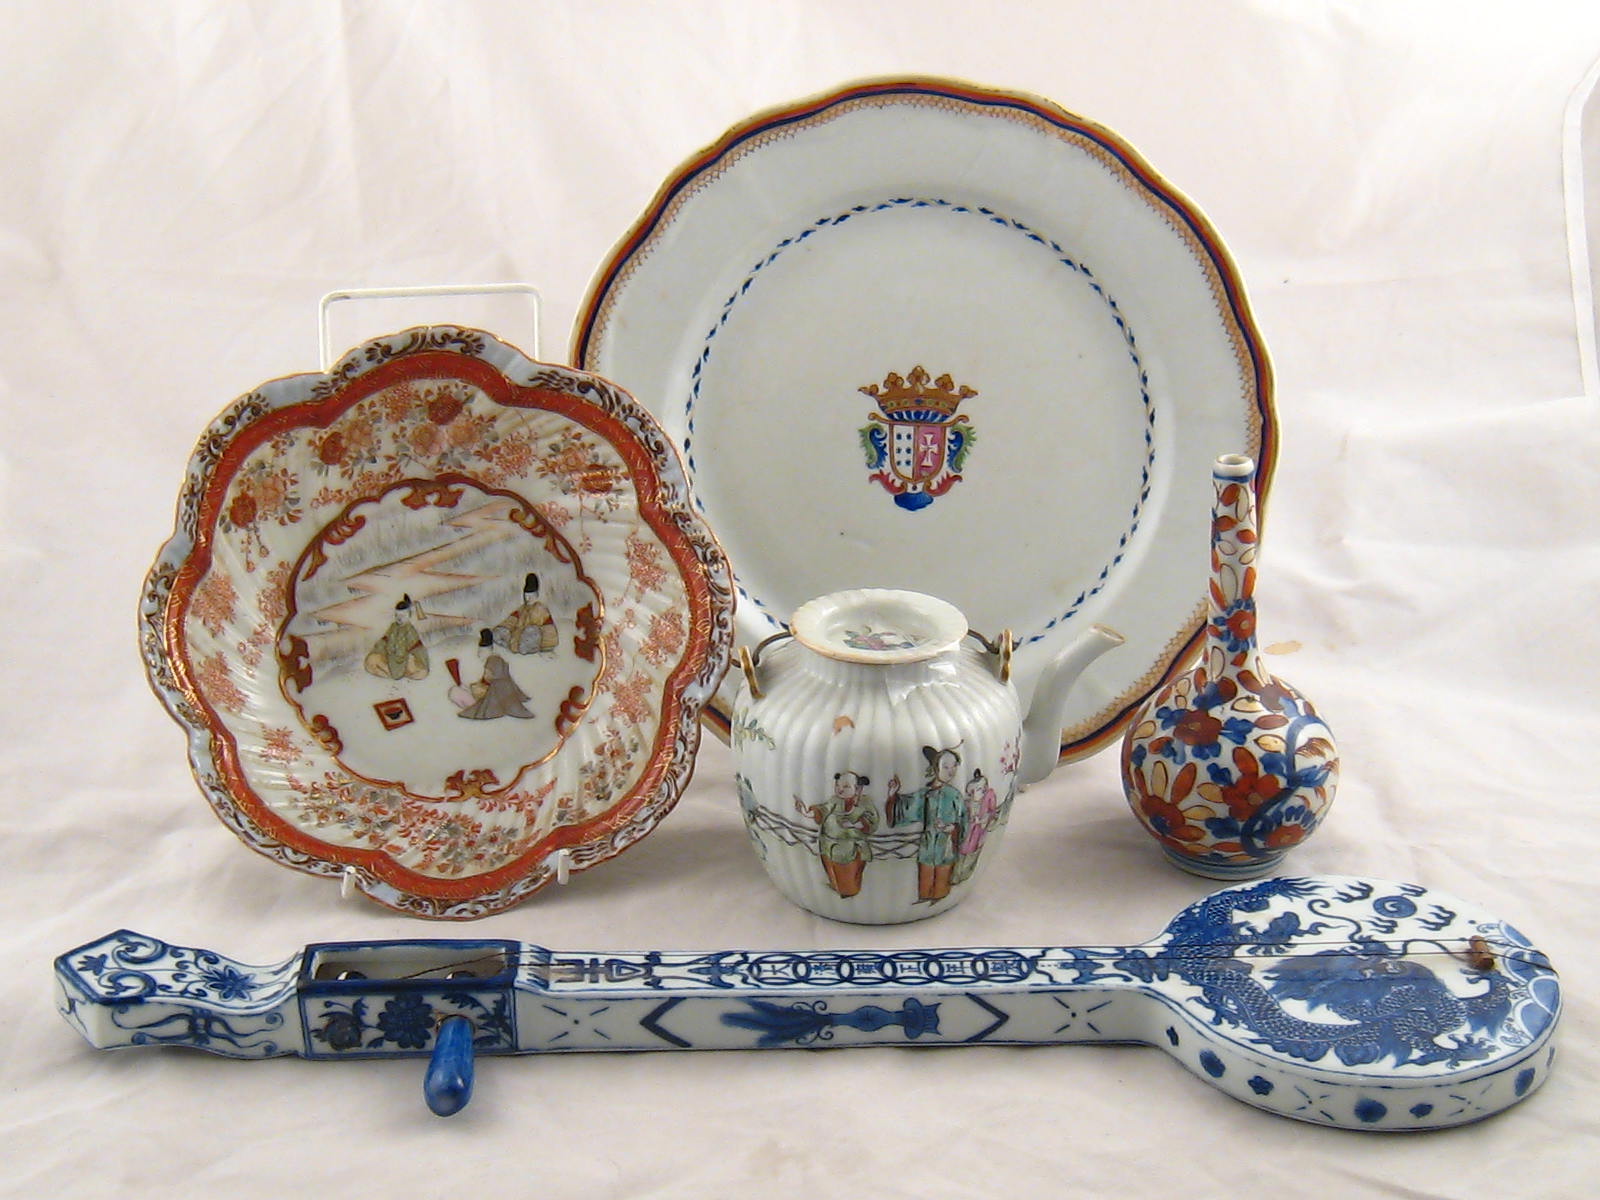 Ceramics. A model two stringed â€œChinese fiddleâ€, a continental ceramic plate with central coat